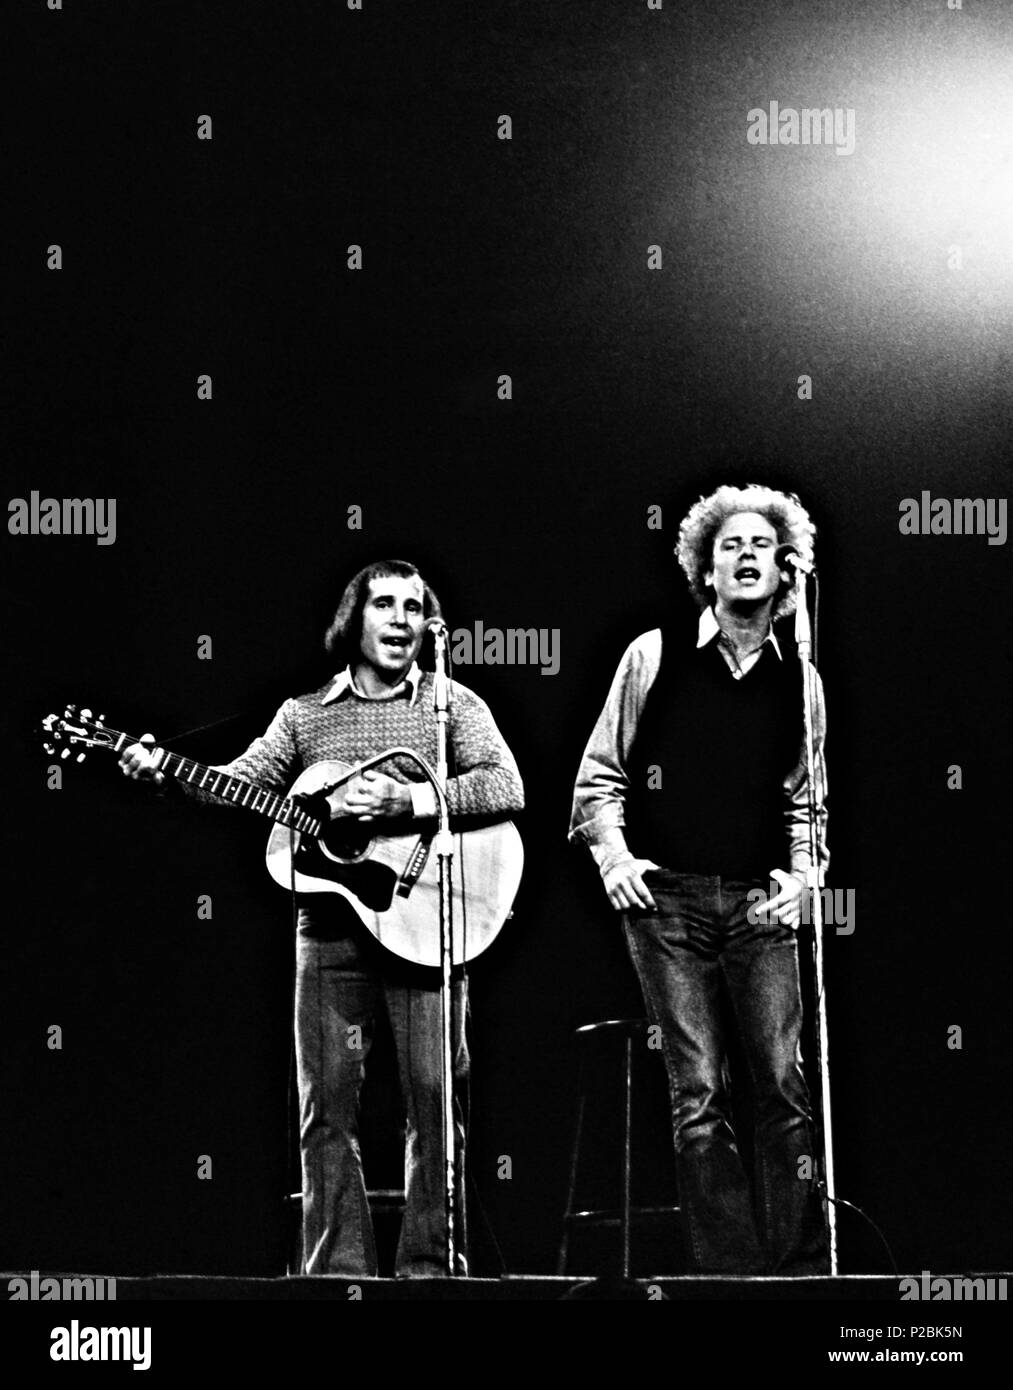 Lot - Simon & Garfunkel Signed Photo/ Concert Pass 11 x 14 inches